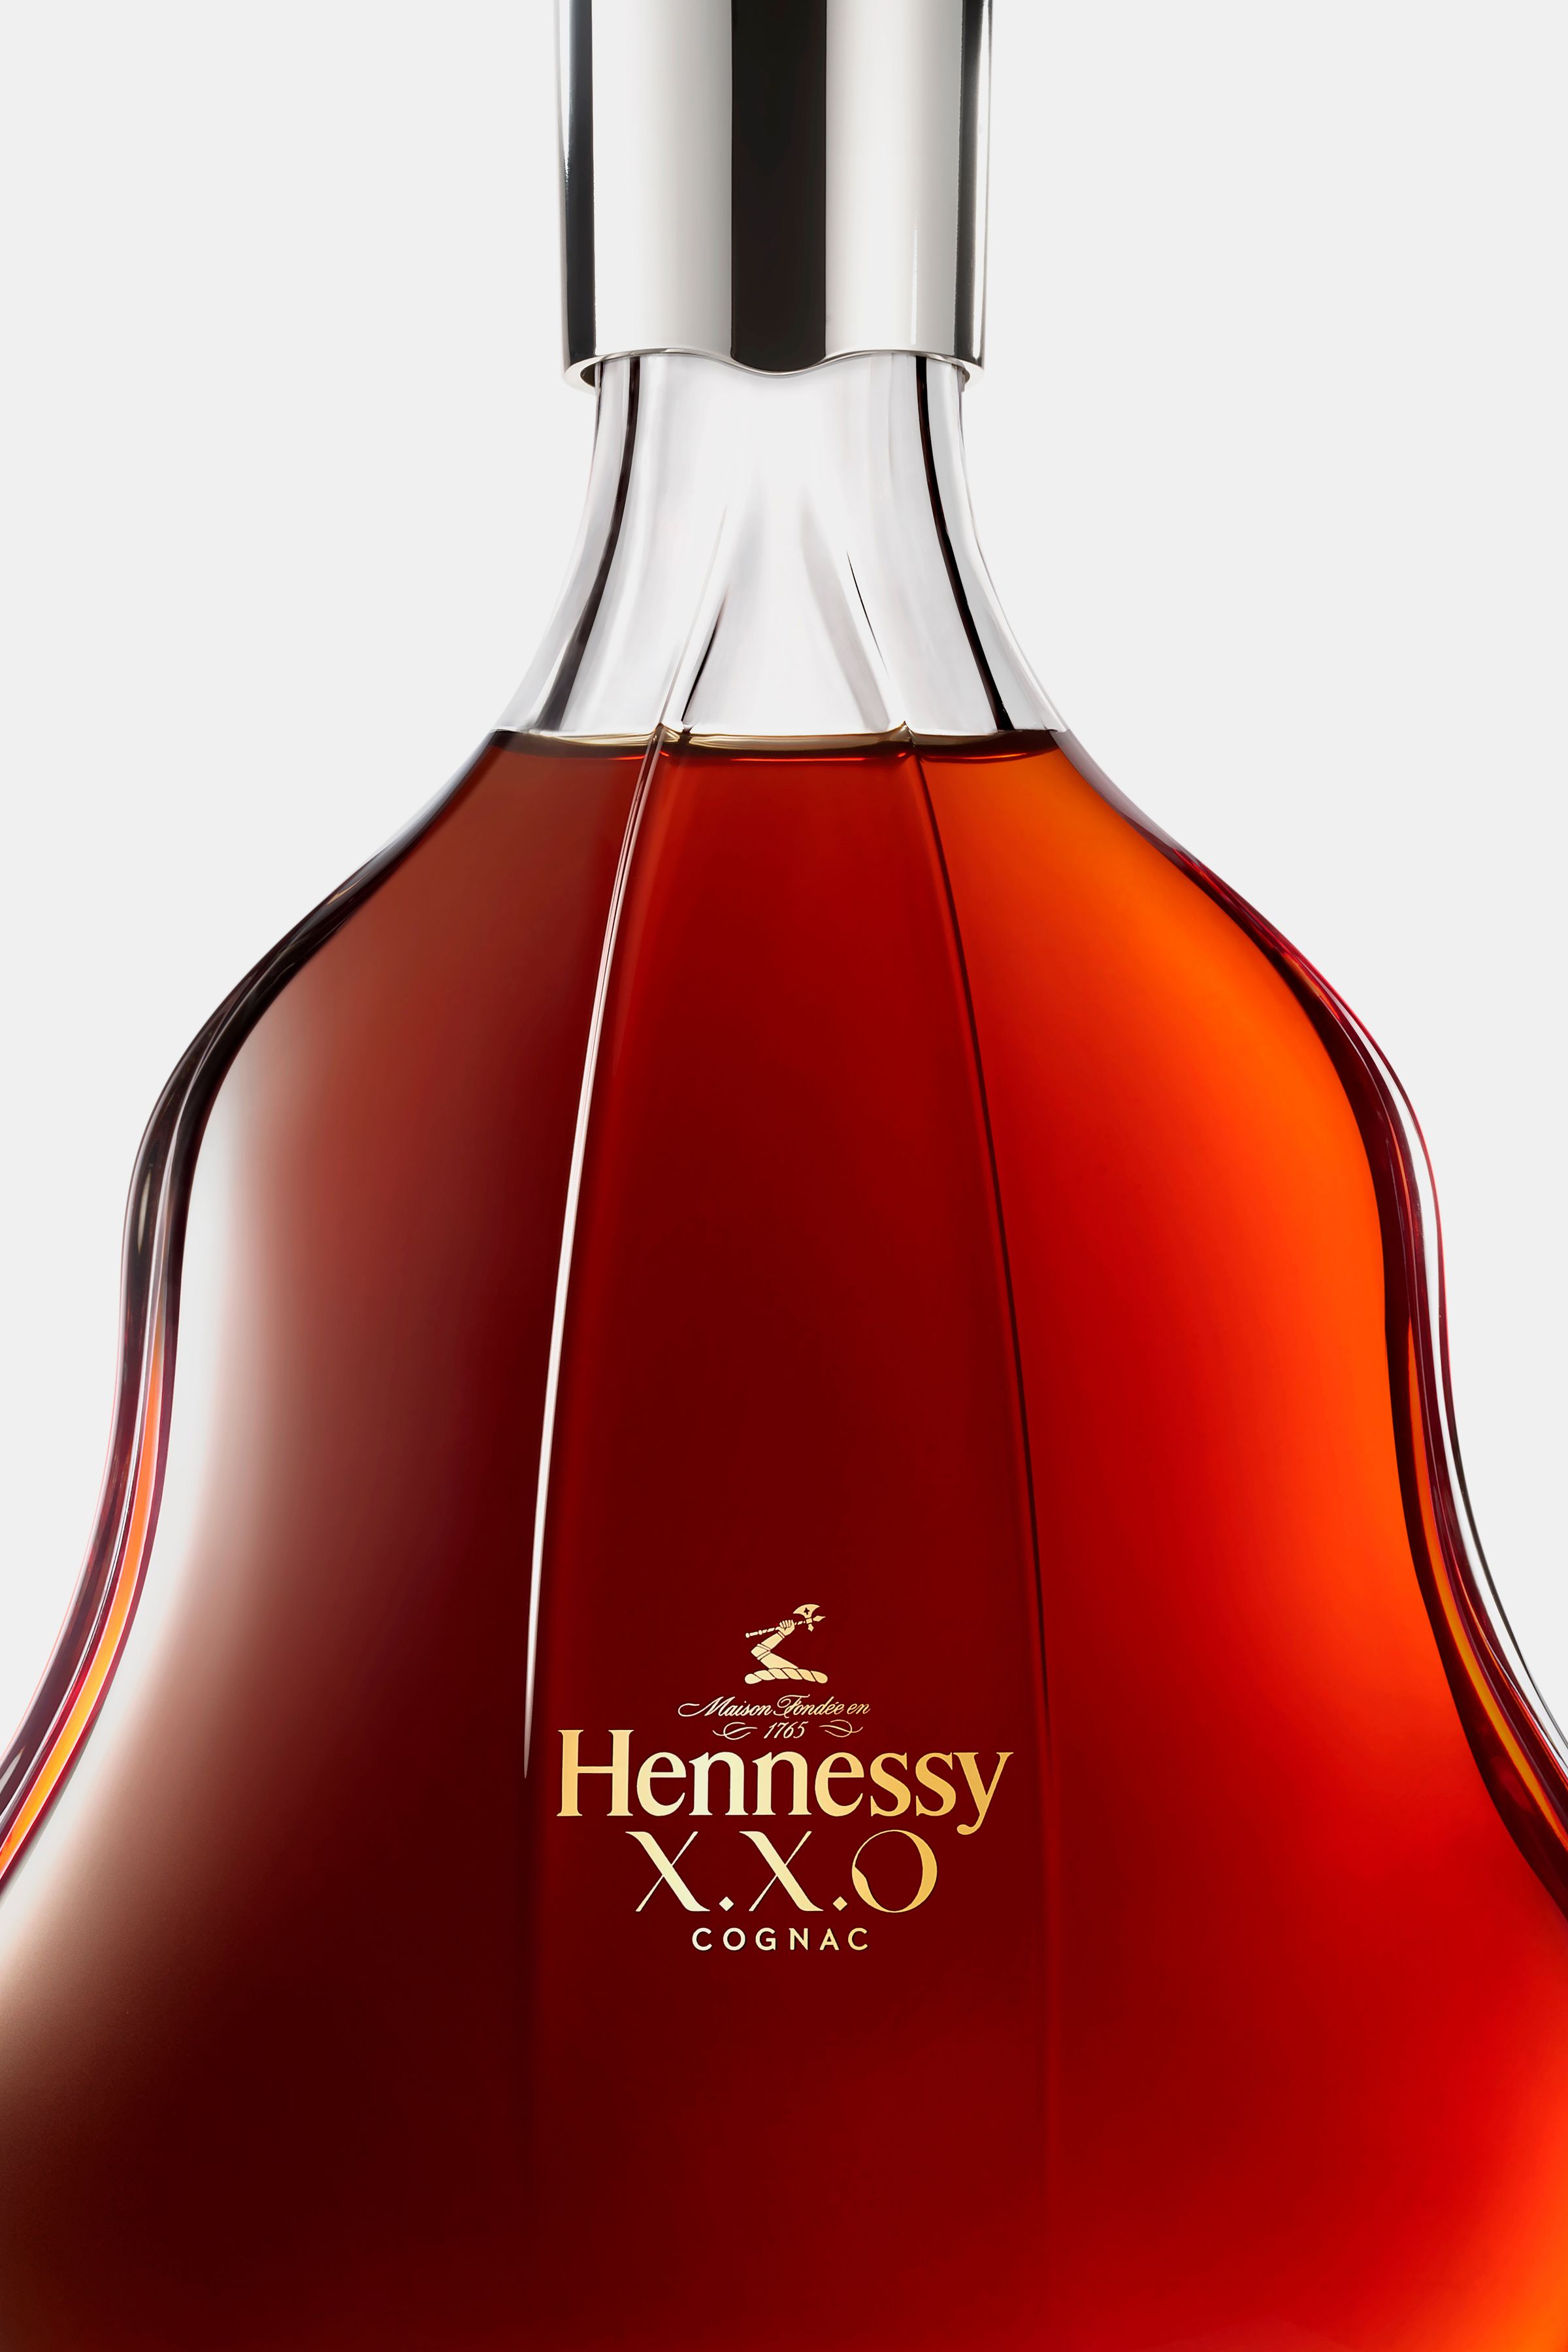 Hennessy XXO logo design applied to bottle